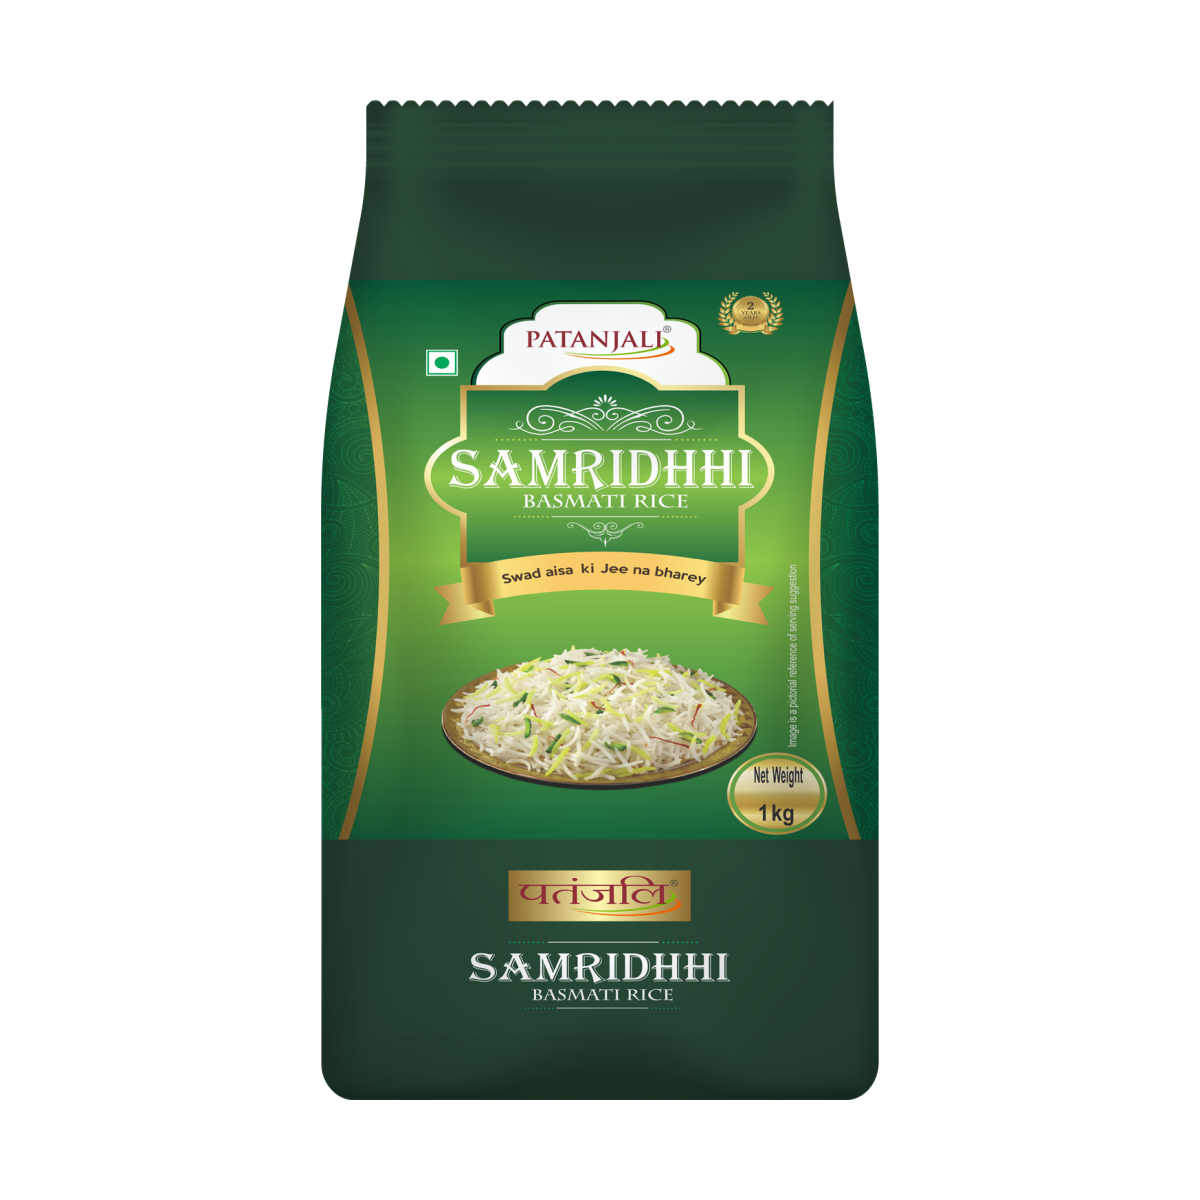 Patanjali Samridhhi Basmati Rice